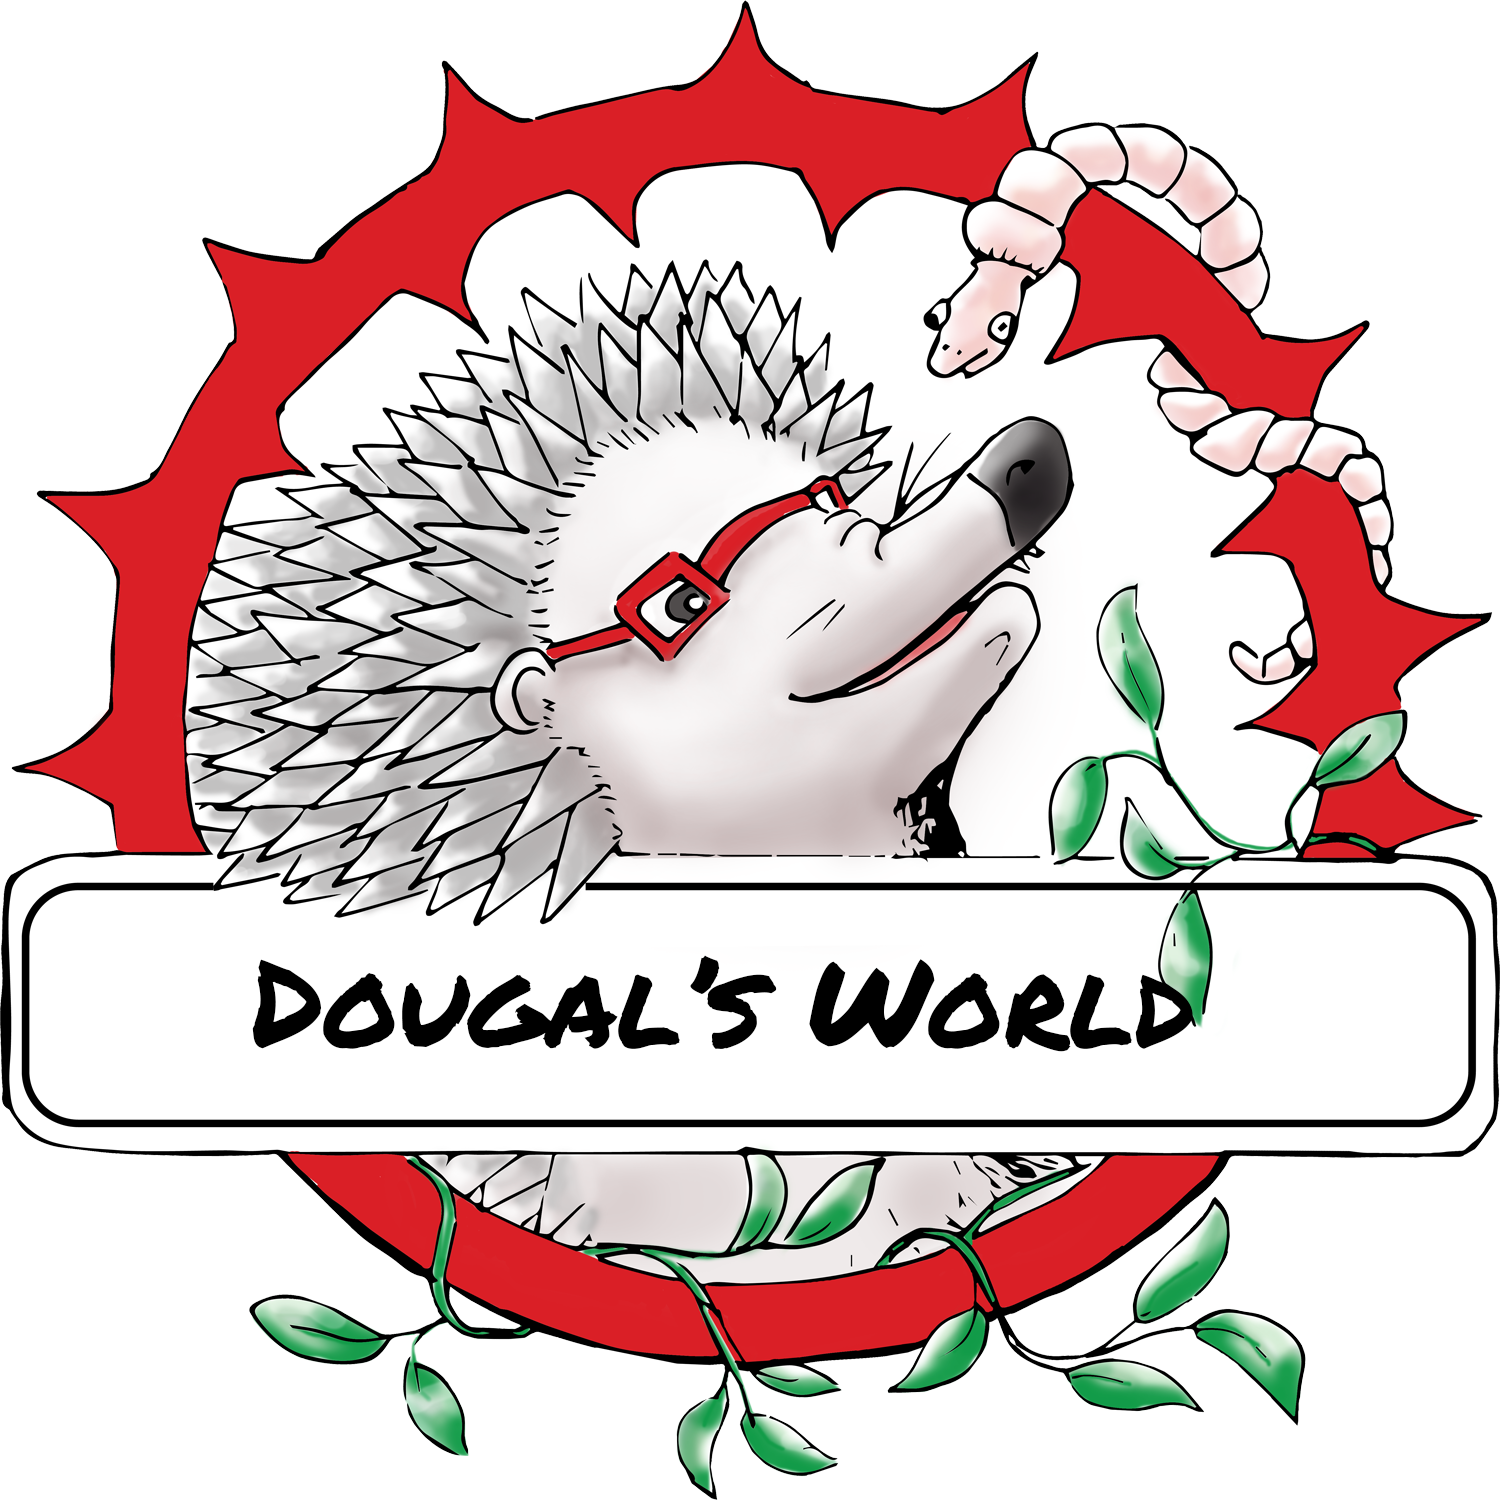 Dougal's World